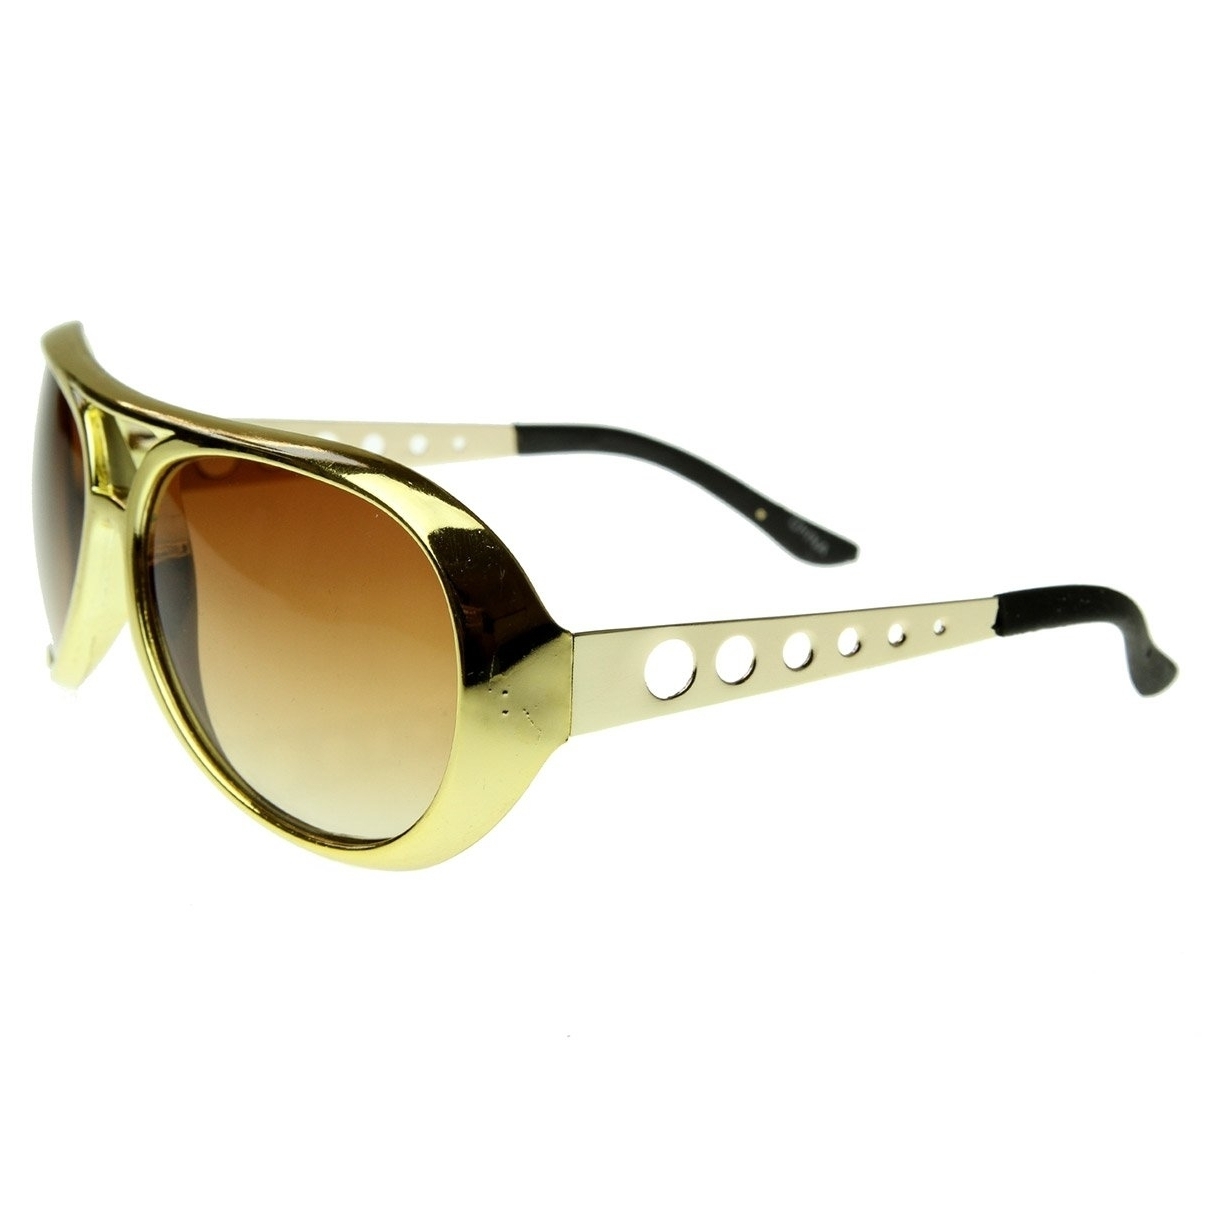 Large Elvis King Of Rock Rock & Roll TCB Aviator Sunglasses - Gold